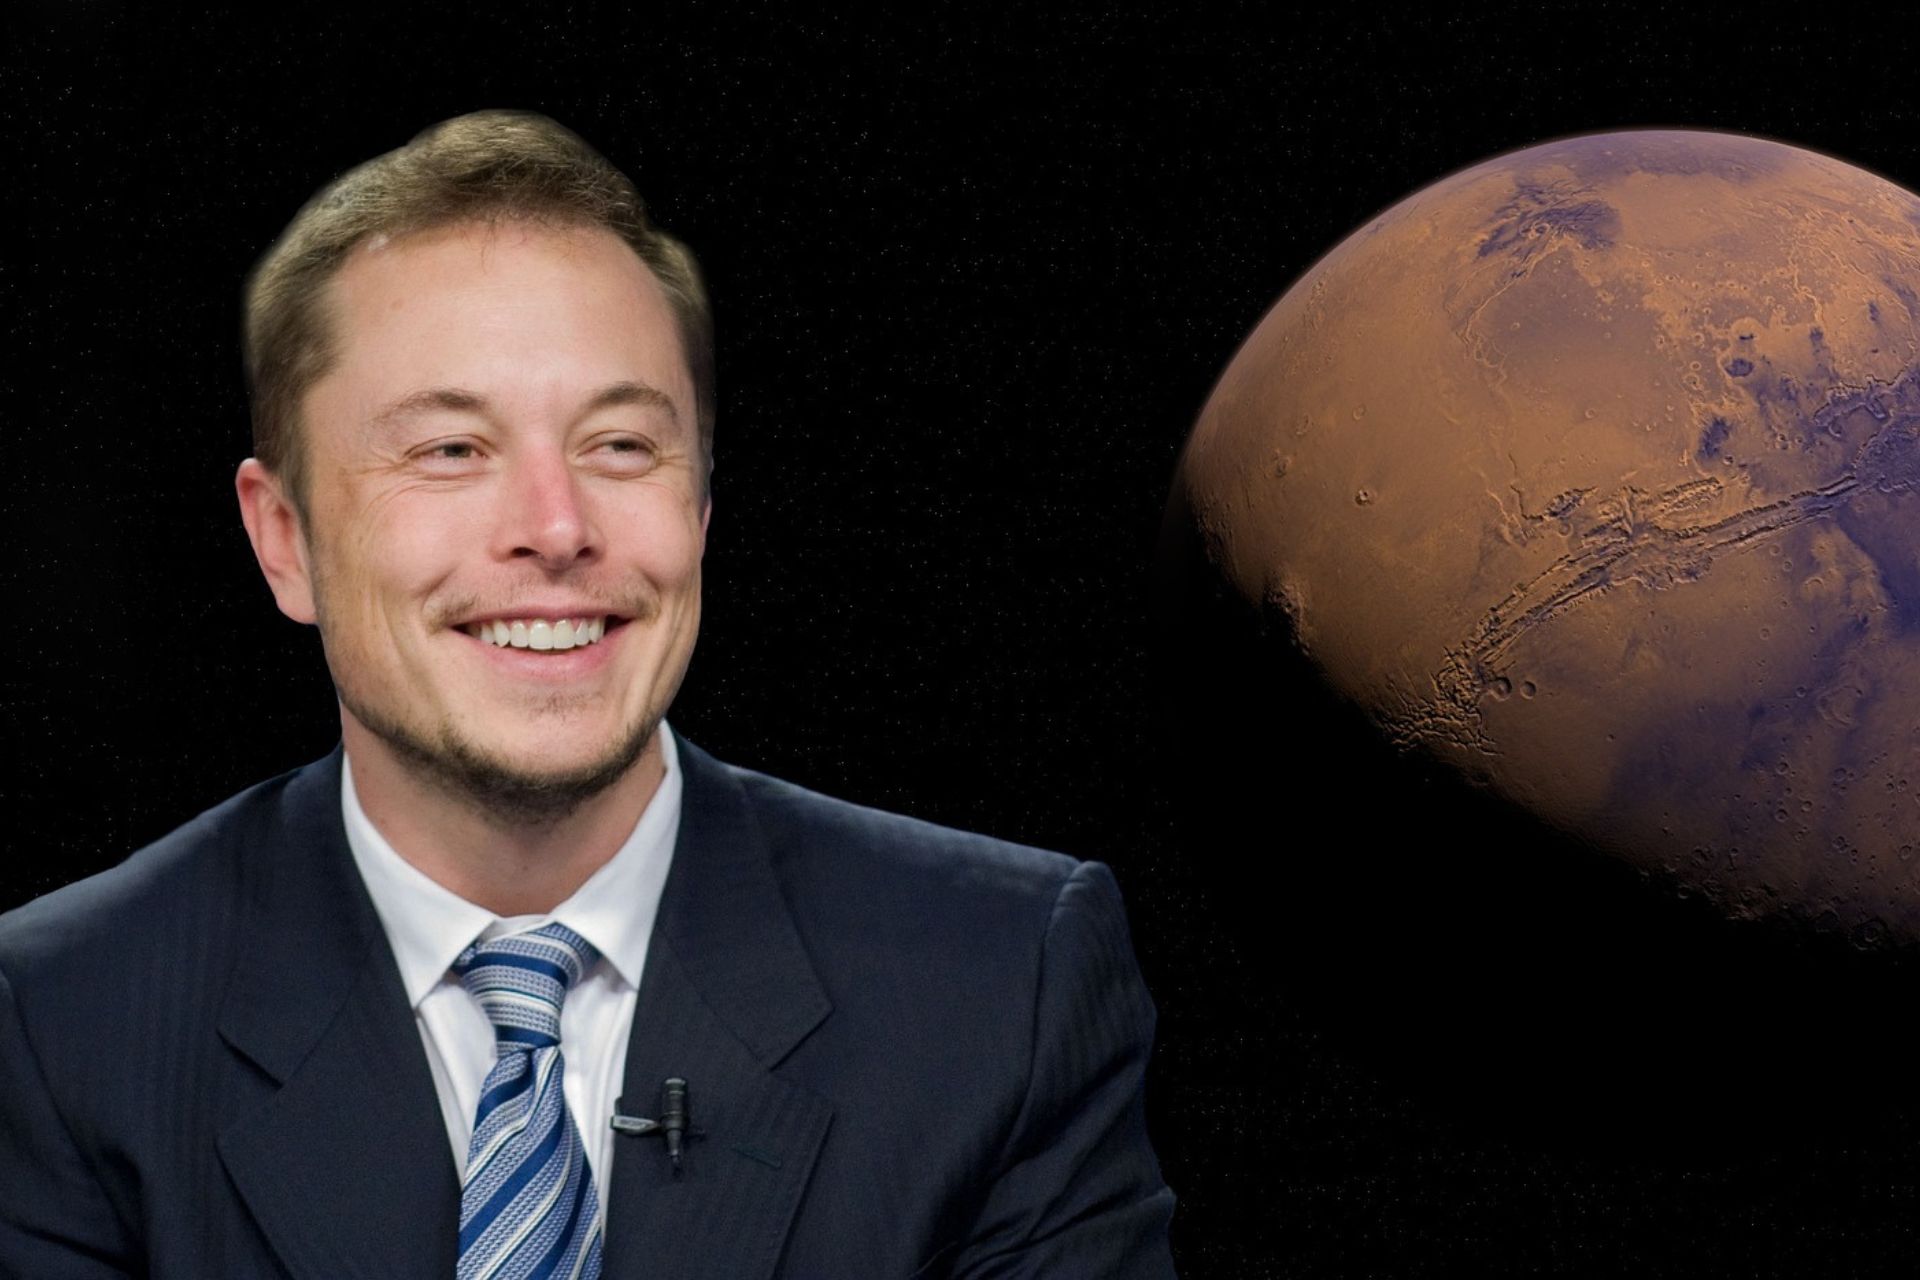 Elon Musk และ Twitter: Elon Musk มหาเศรษฐีชาวอเมริกันชื่อดัง CEO ของ Tesla ผู้ผลิตรถยนต์ไฟฟ้า